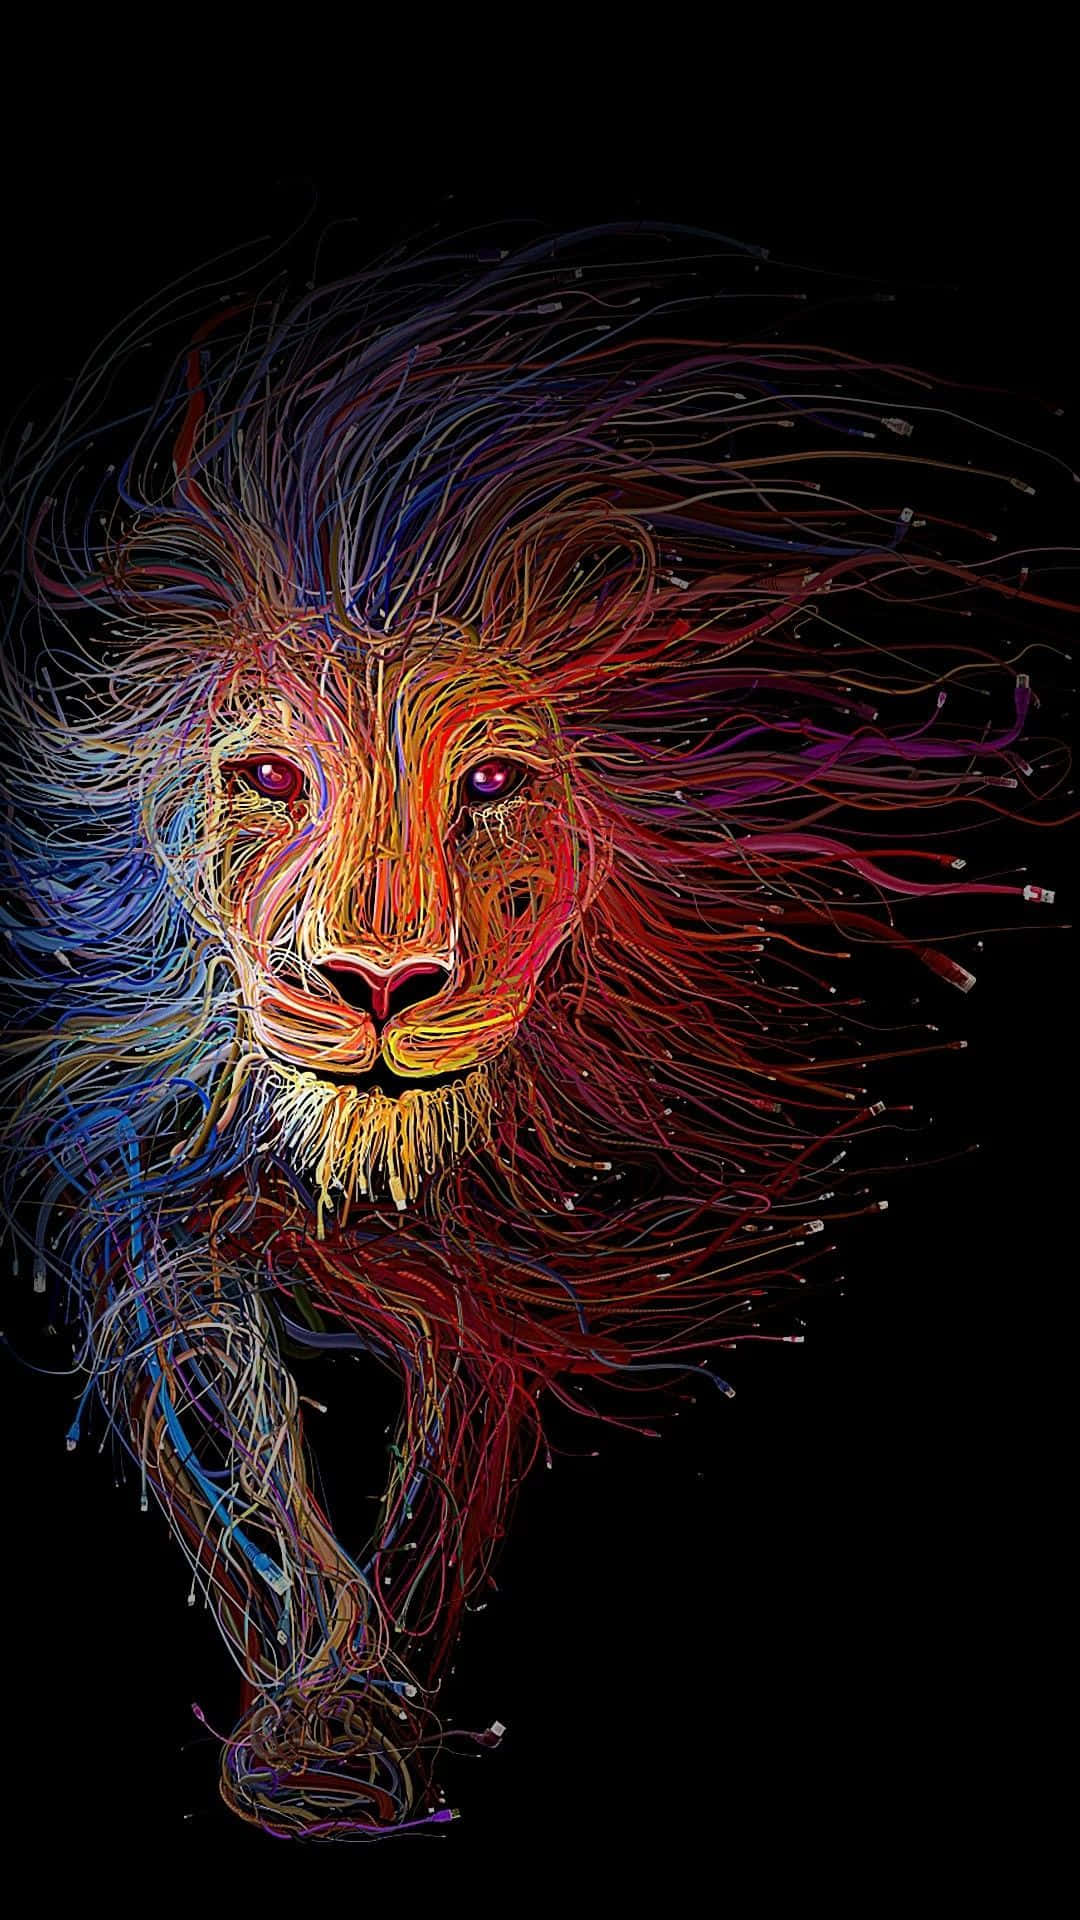 "A close up image of Leo the Lion"